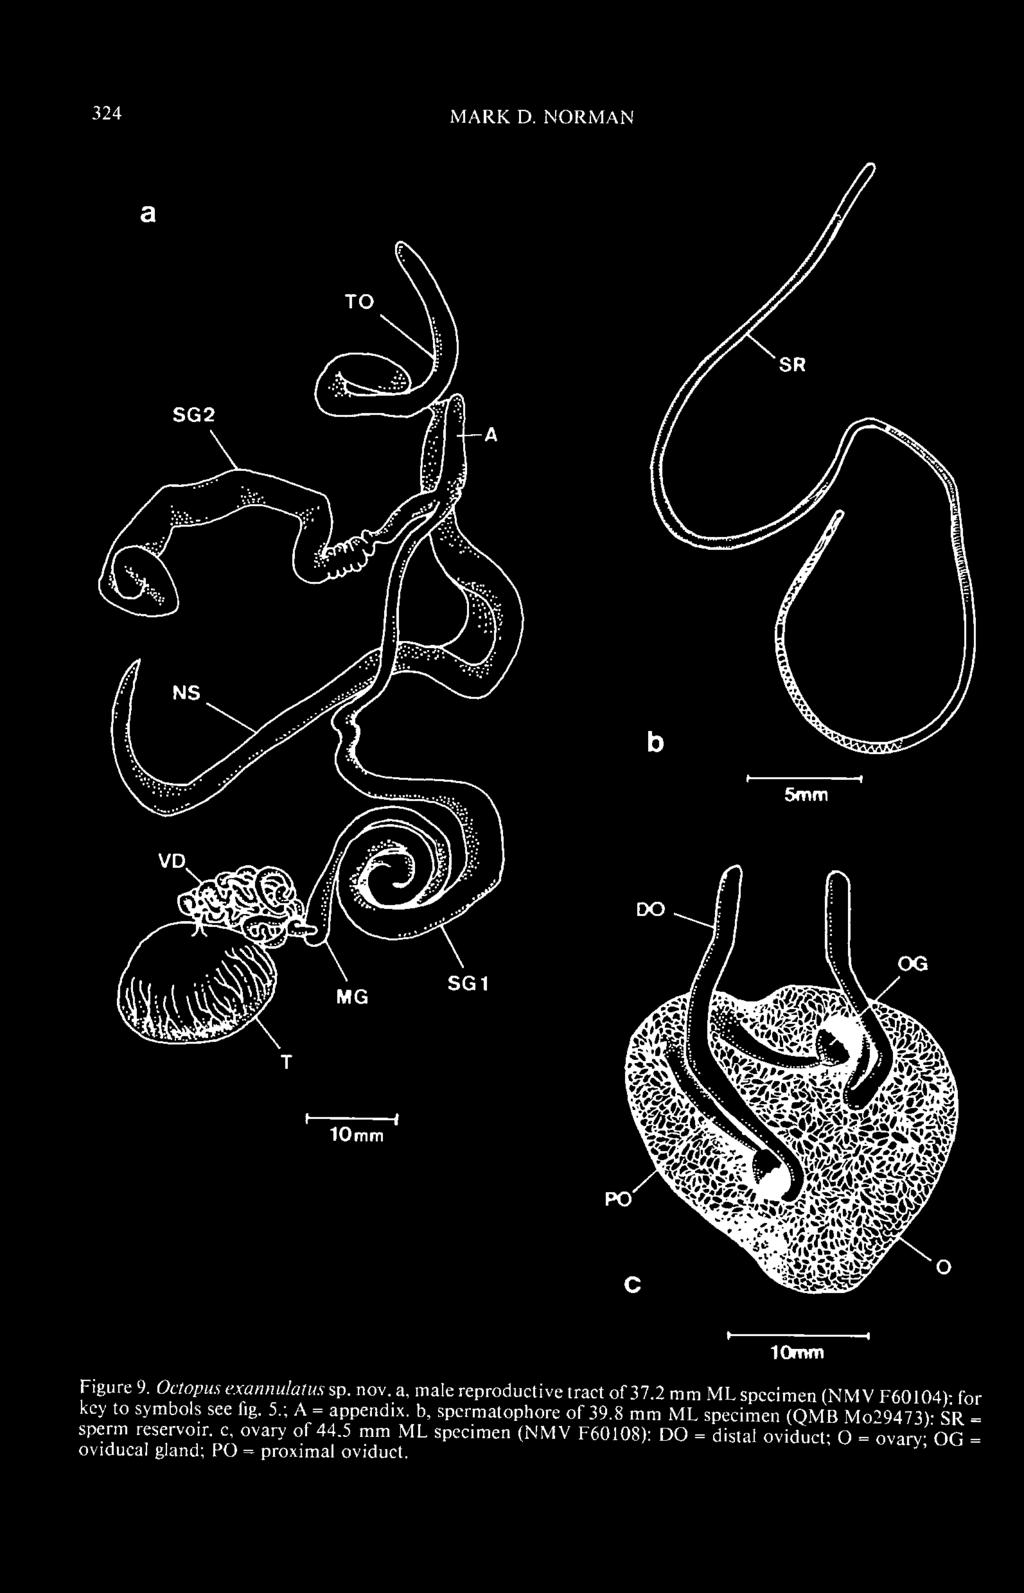 ; A = appendix, b, spcrmatophorc of 39.8 mm ML specimen (QMB Mo29473)- SR = sperm reservoir, c.